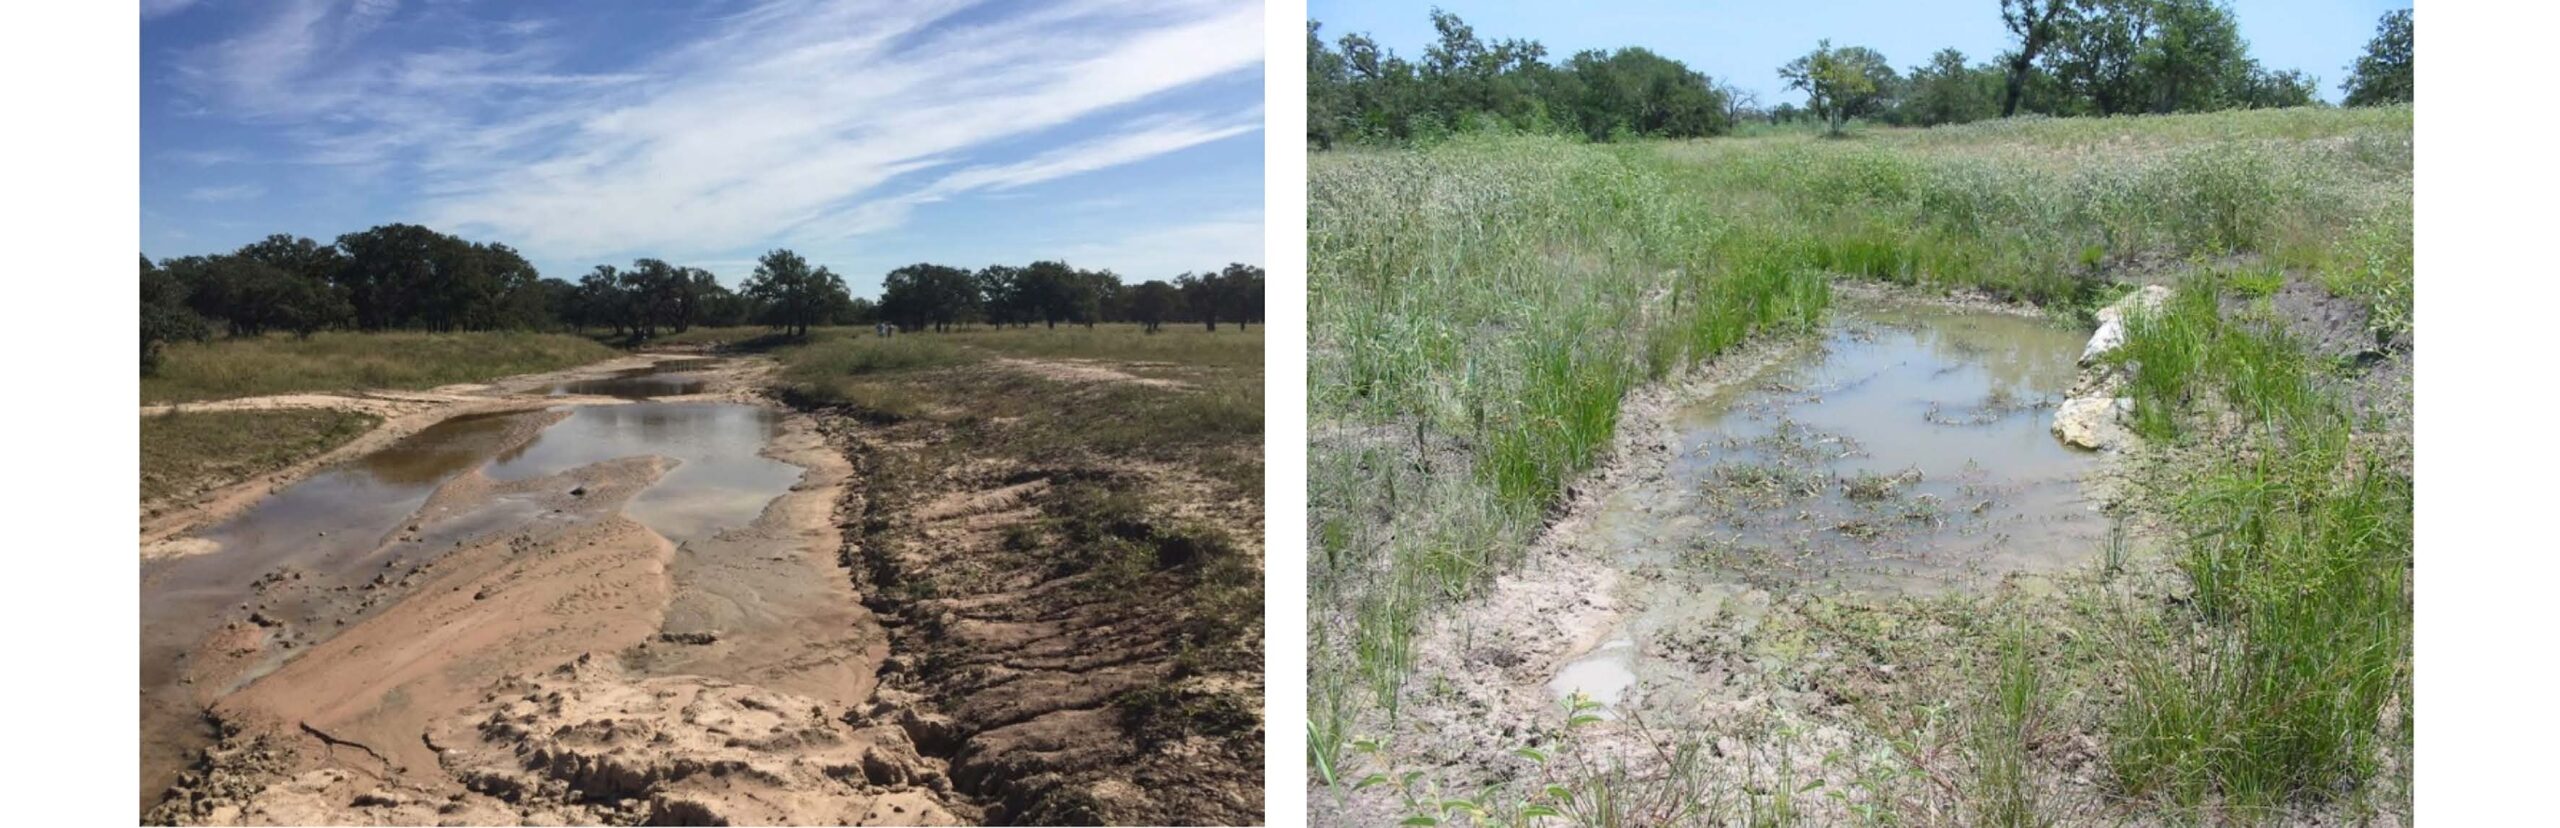 Sulfur Creek stream restoration side-by-side comparison 